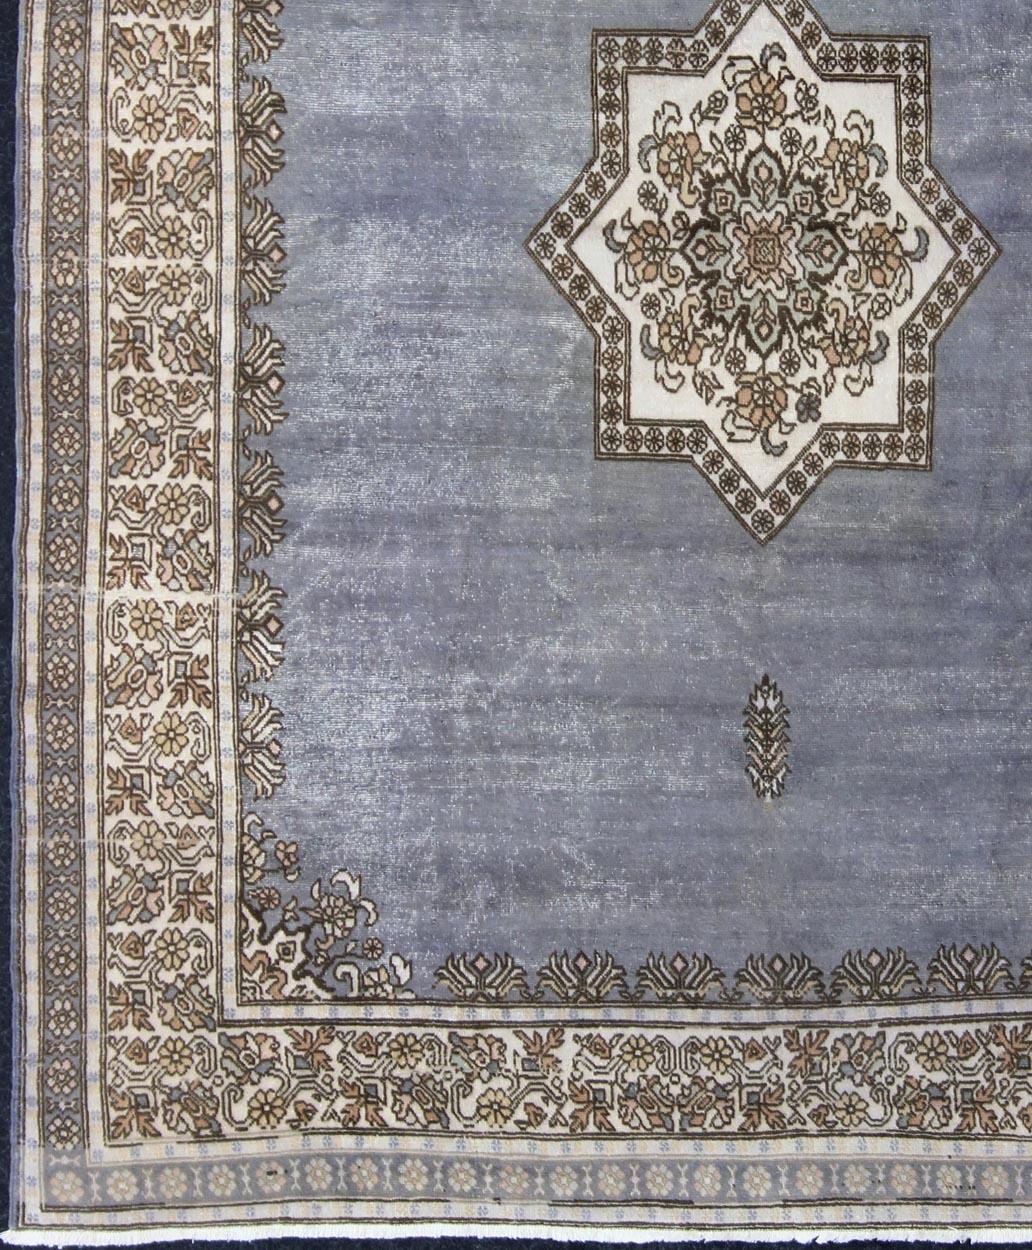 Grayish-blue traditional Medallion design Moroccan rug. Keivan Woven Arts /  rug 13-0607, country of origin / type: Morocco / Tribal, circa 1960
This Moroccan rug features a traditional medallion design consisting of a star motif in the central